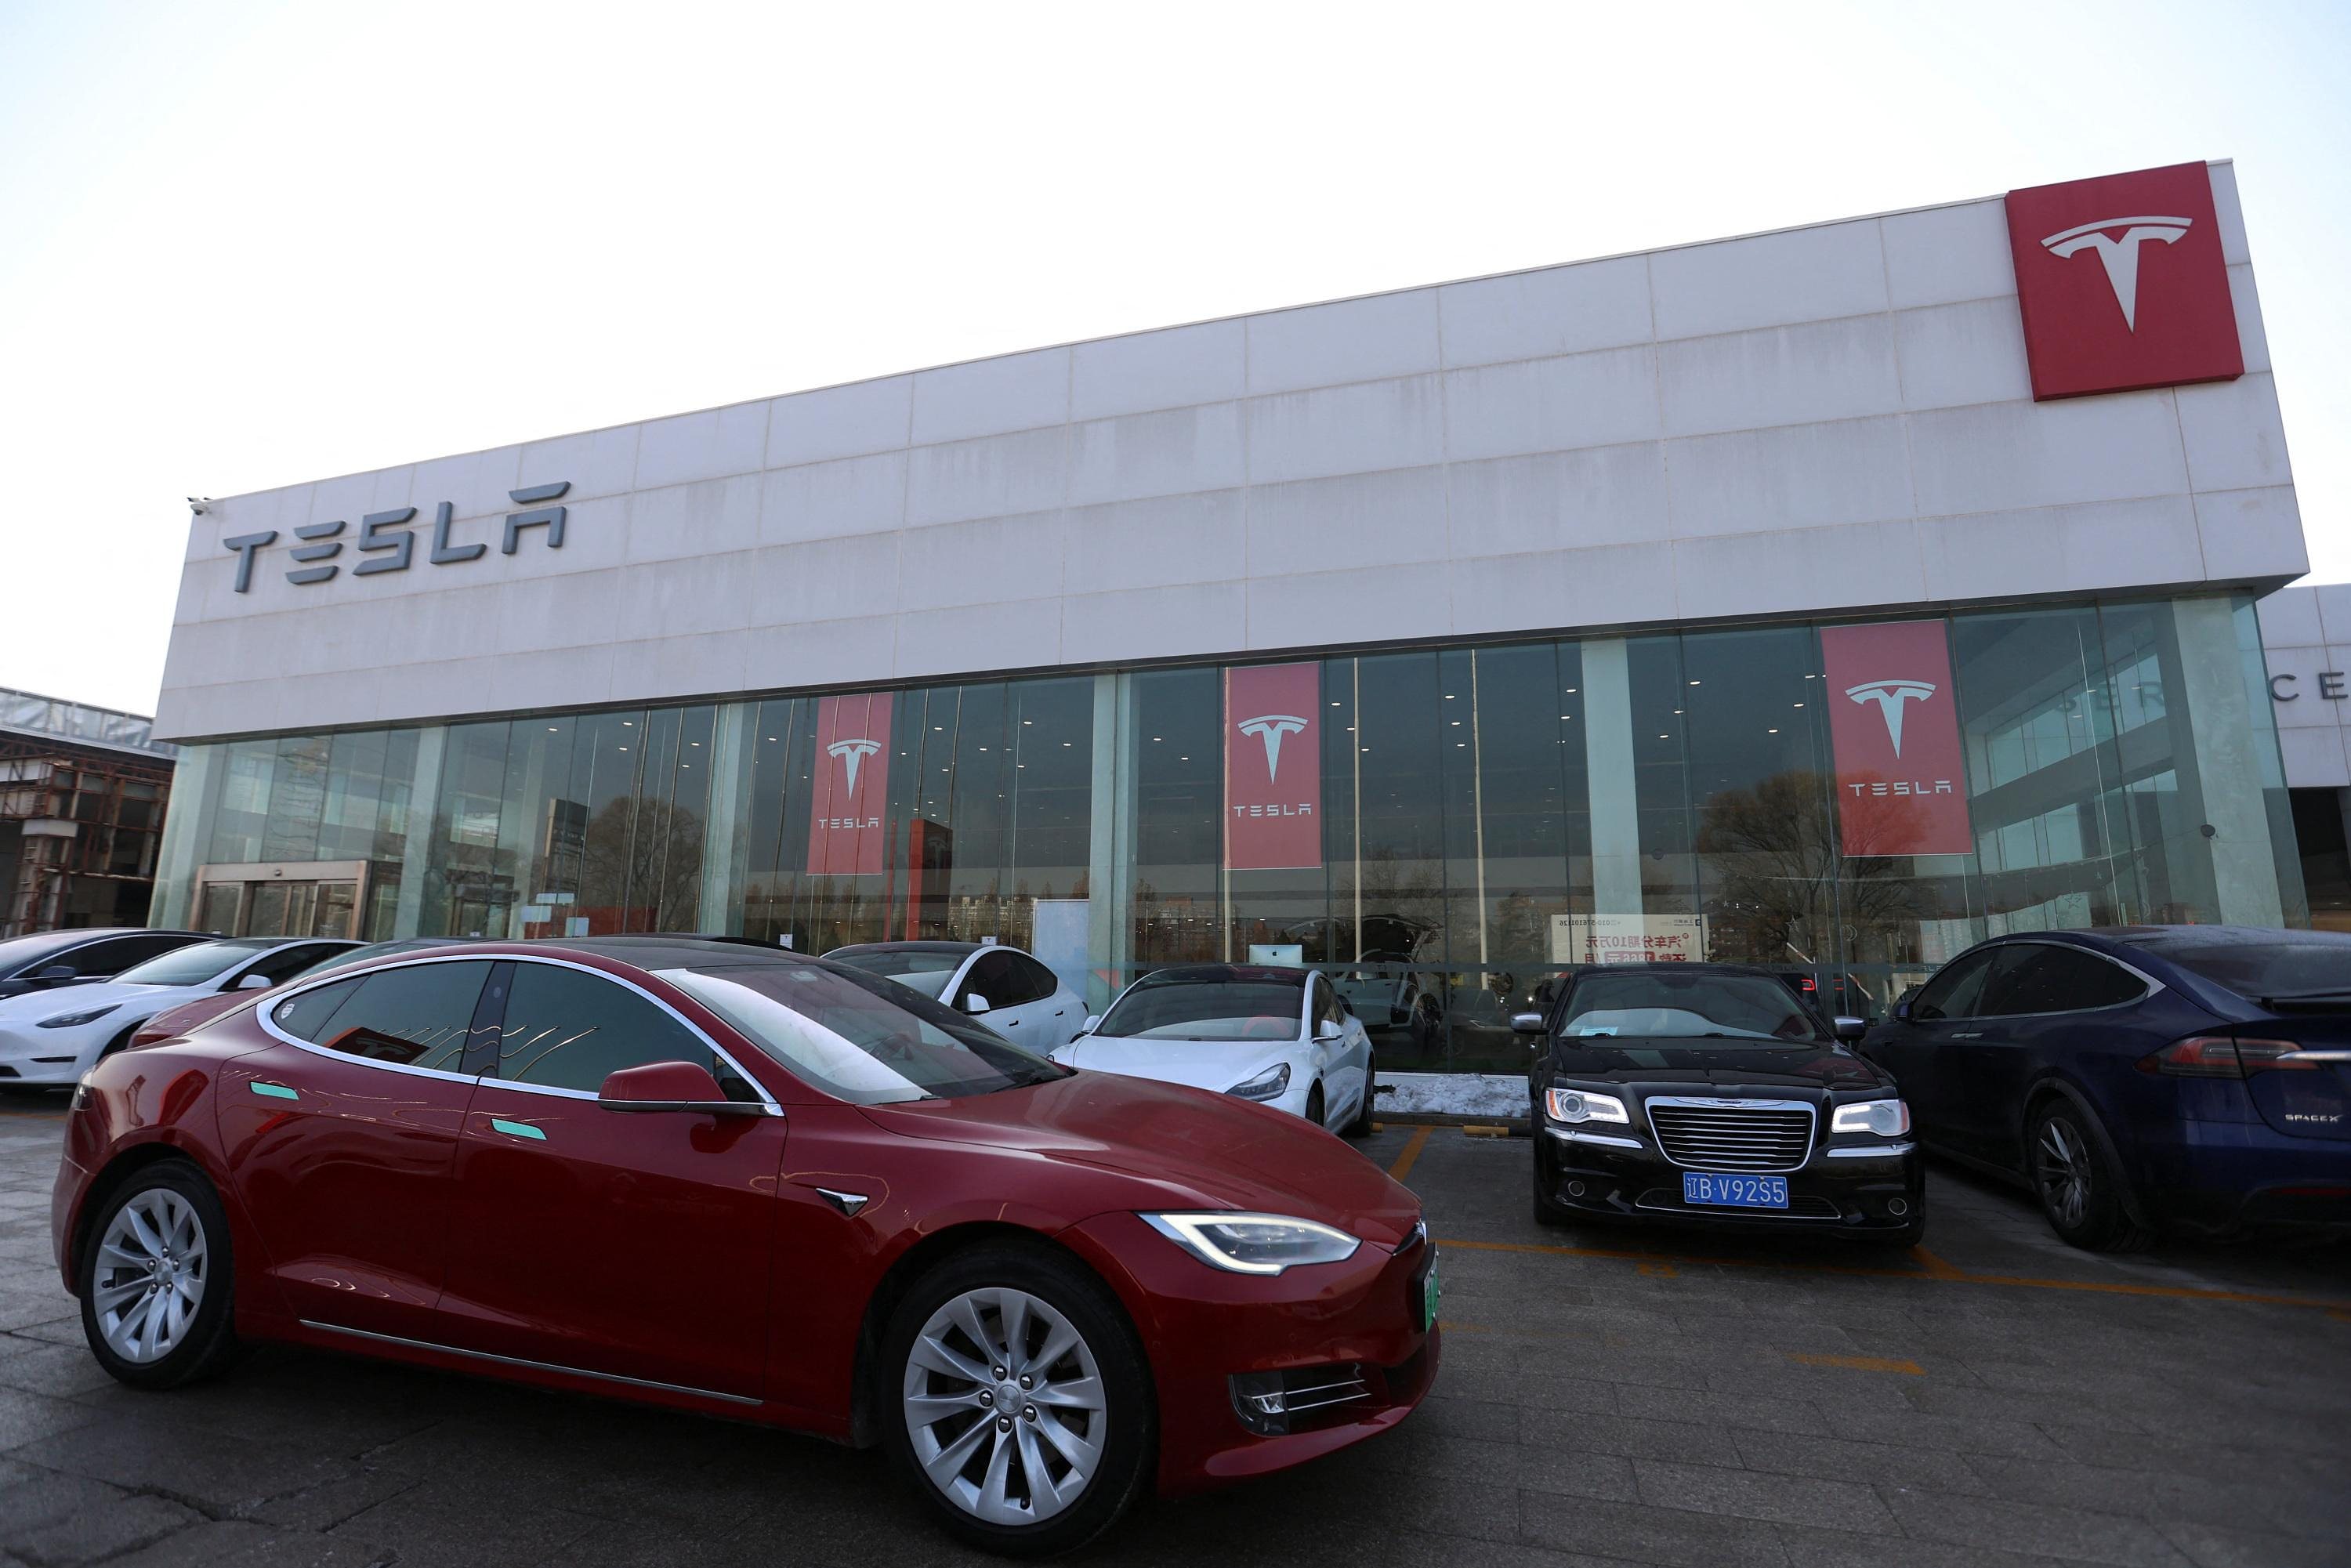 China: Tesla recalls 1.6 million vehicles over software problem